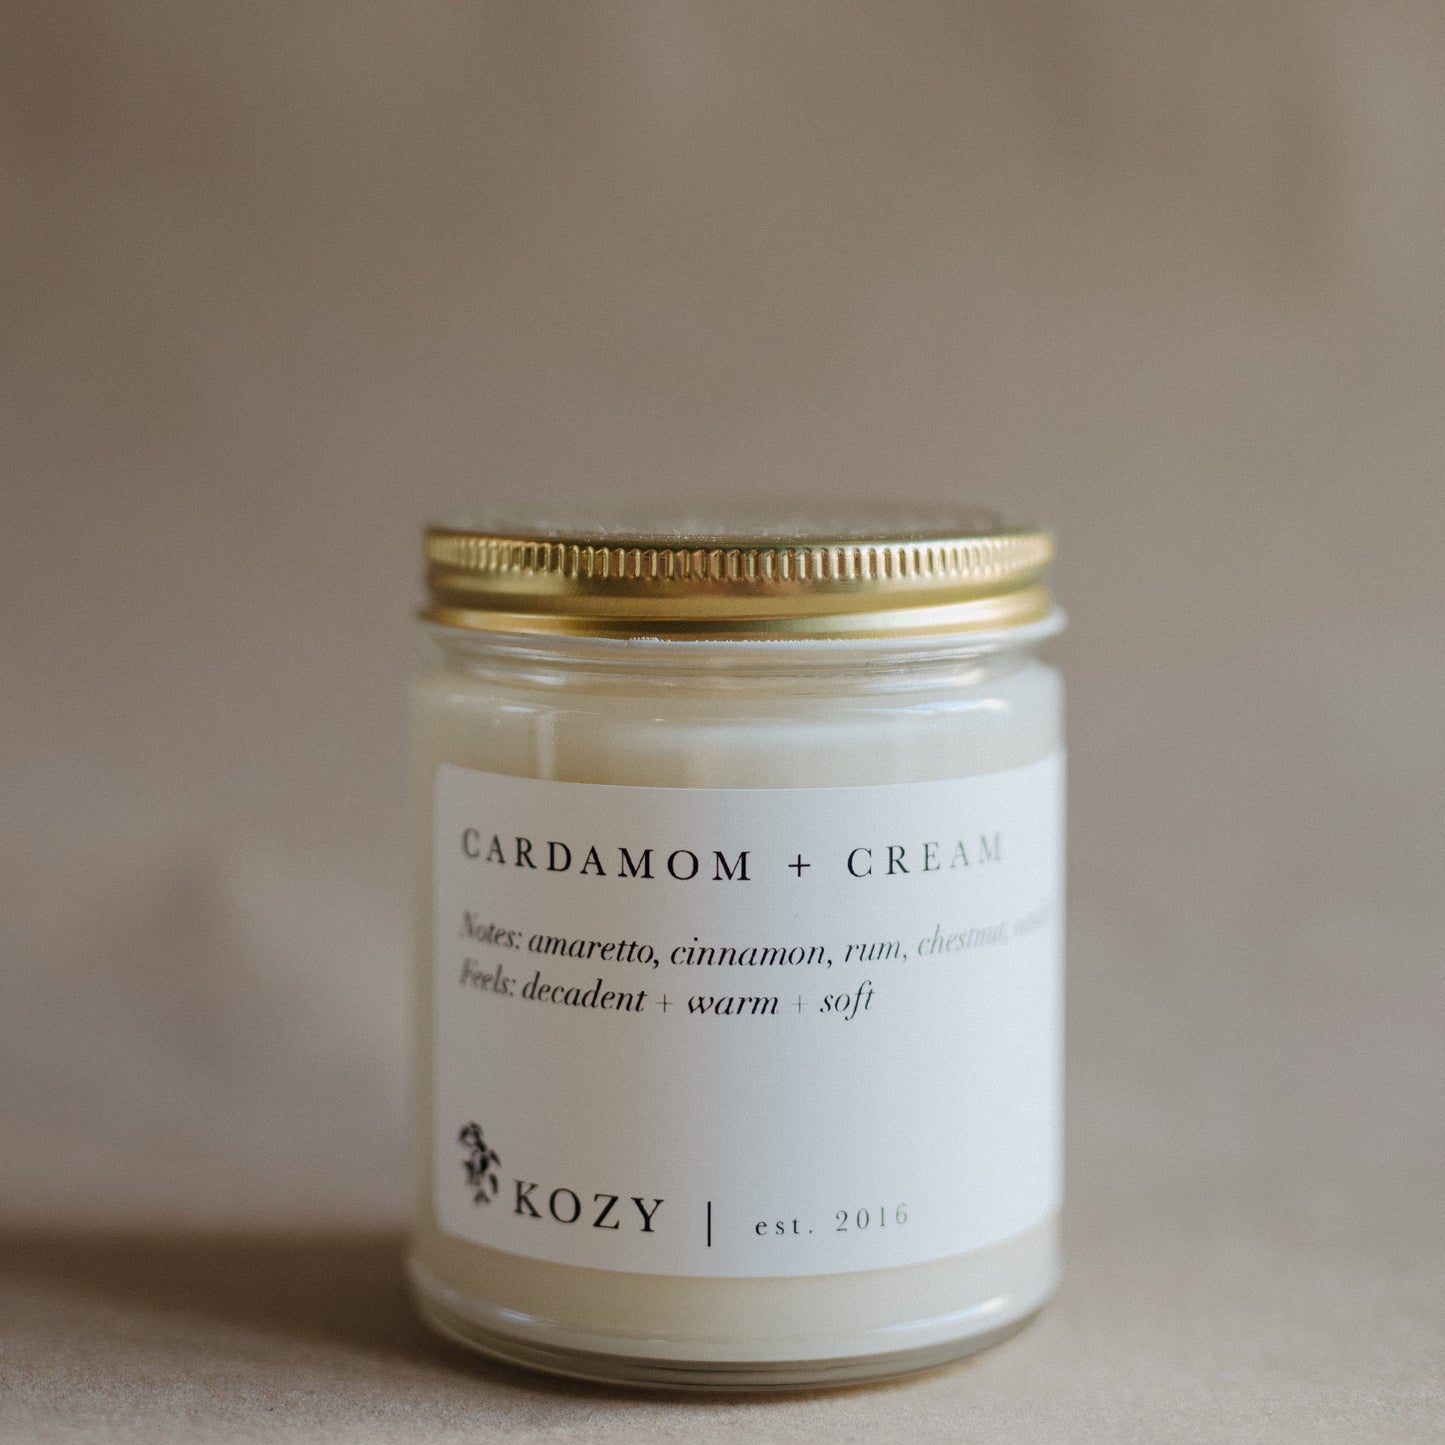 Cardamom + Cream